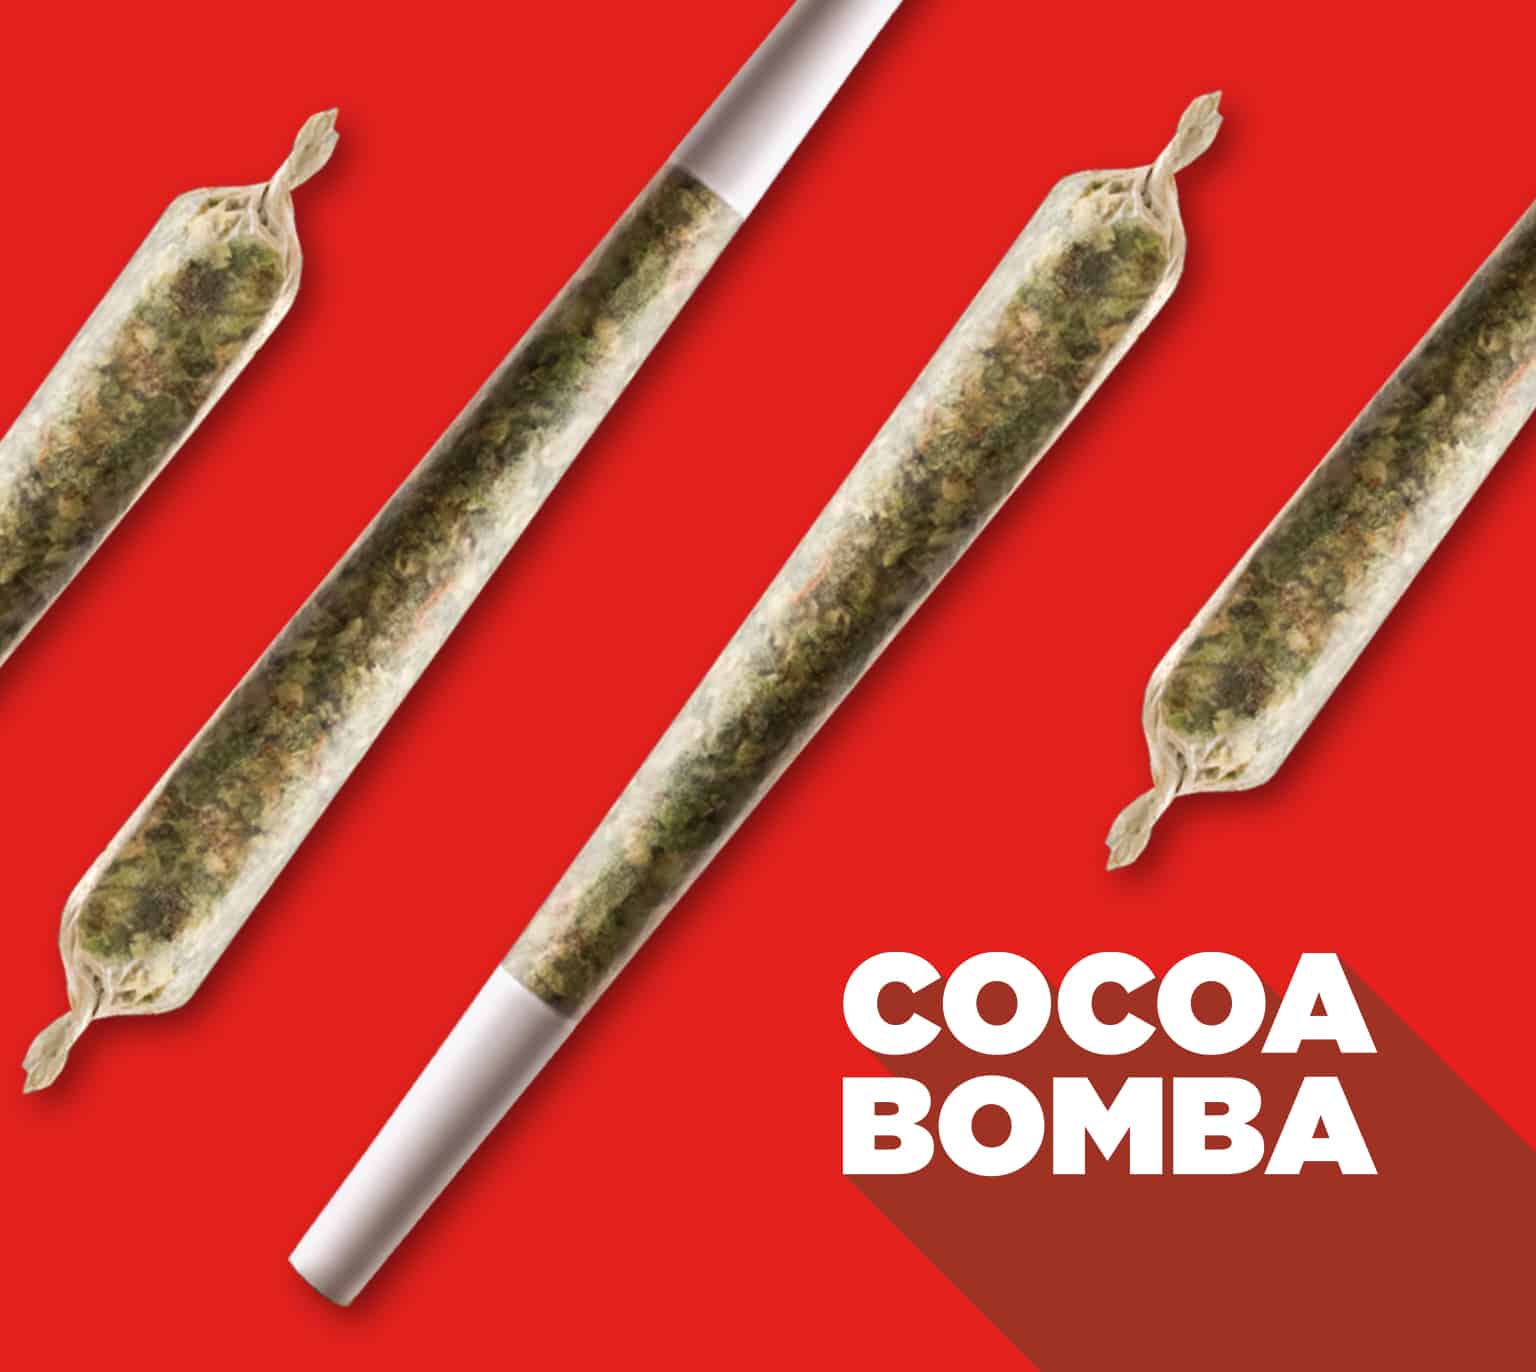 cocoa bomba with pre-roll